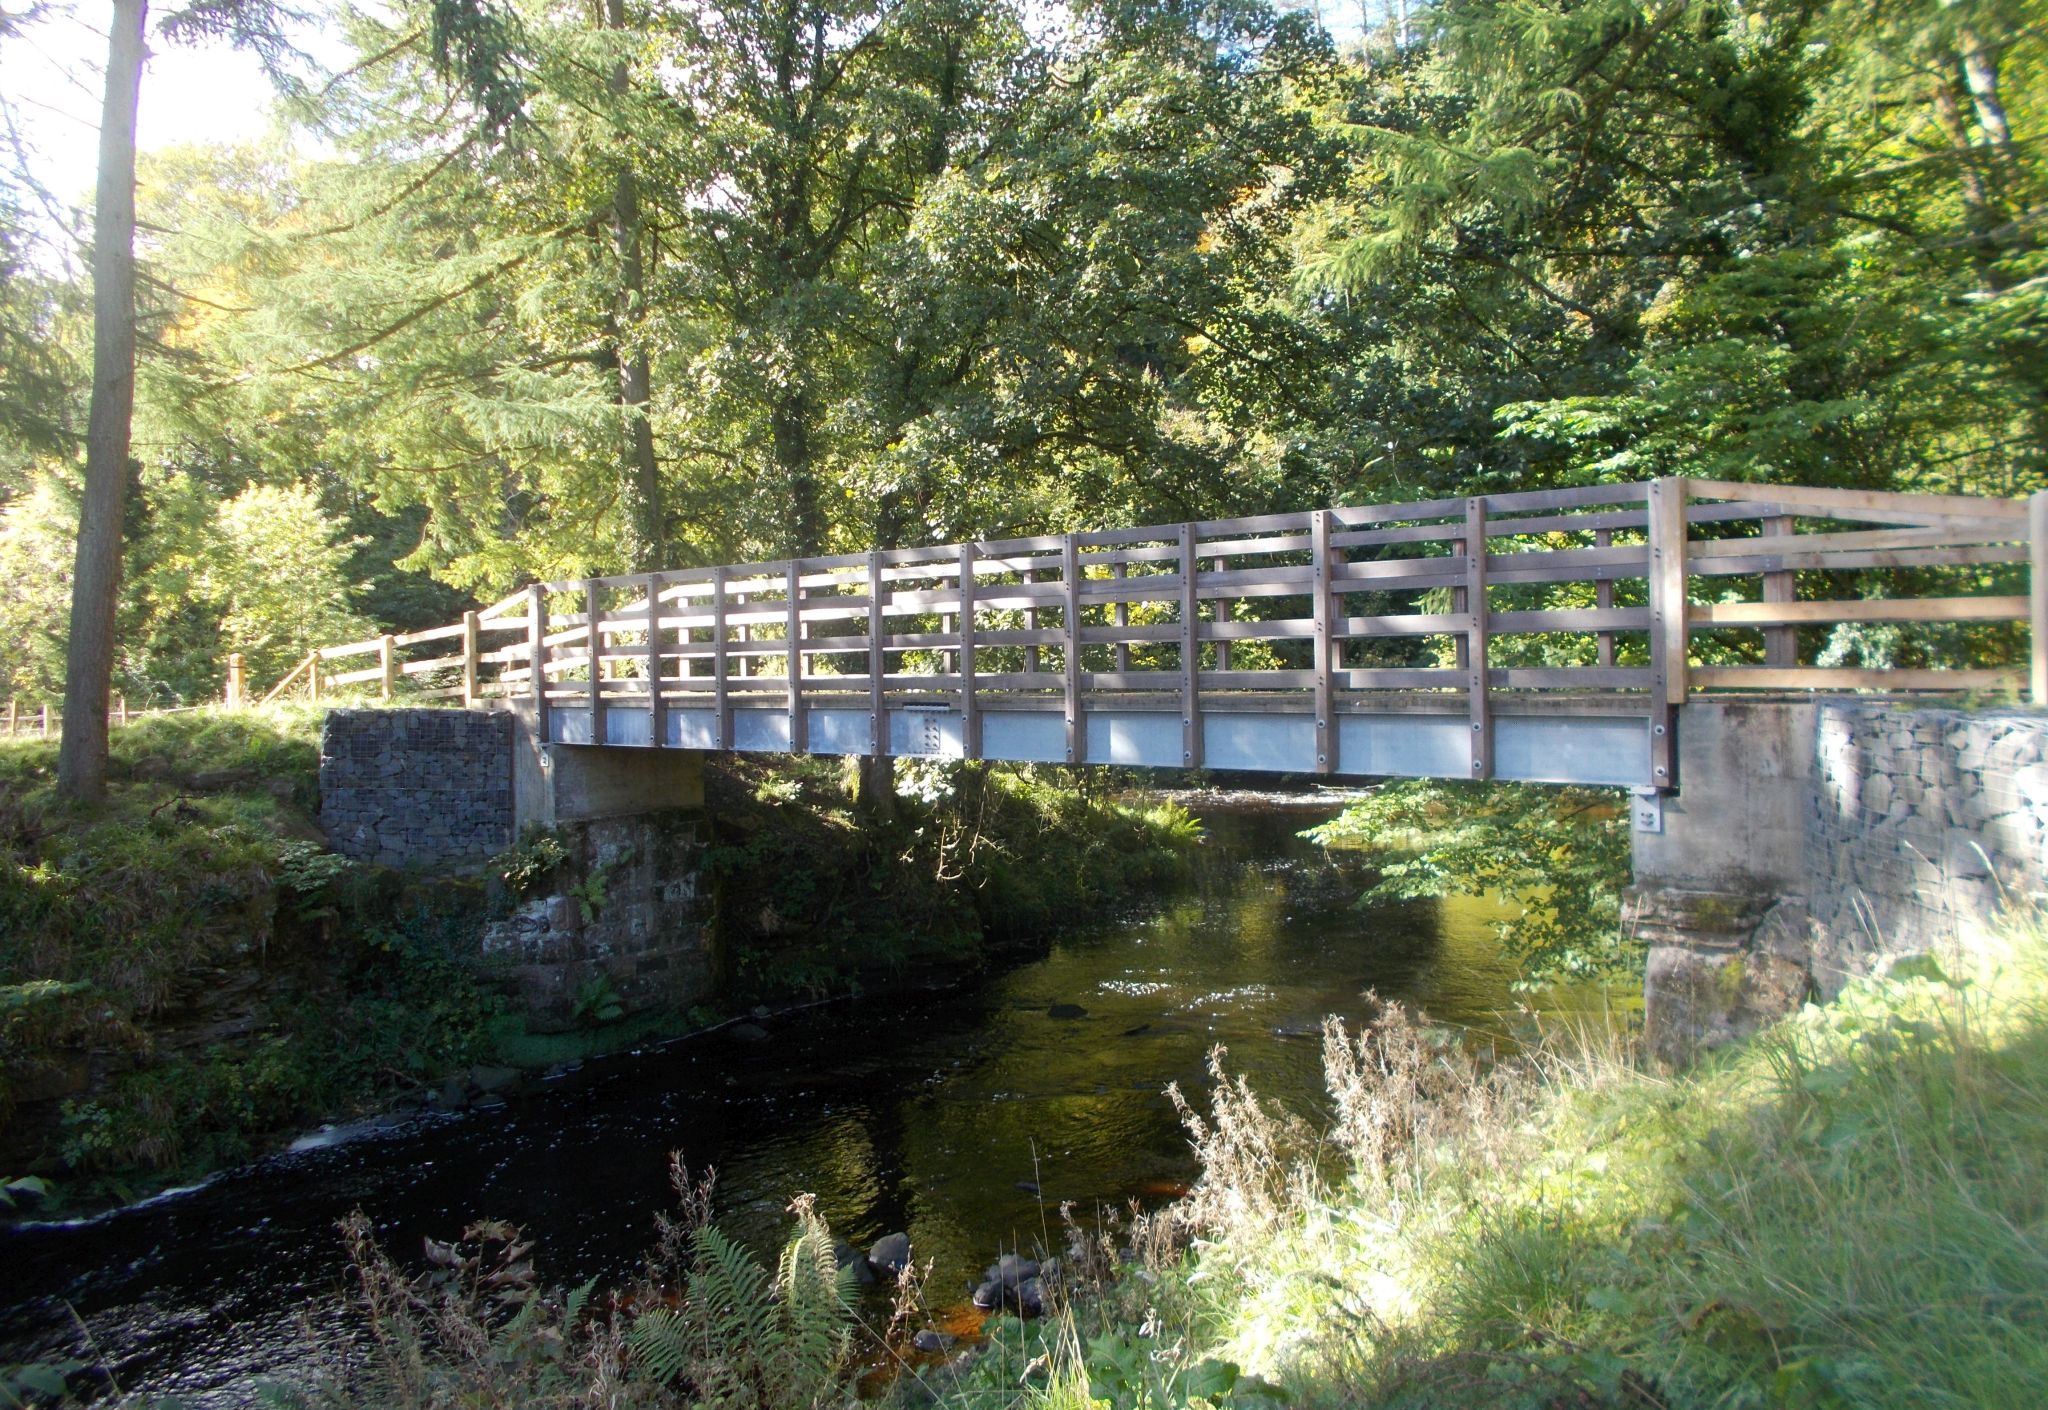 Bridge over the Fenwick River